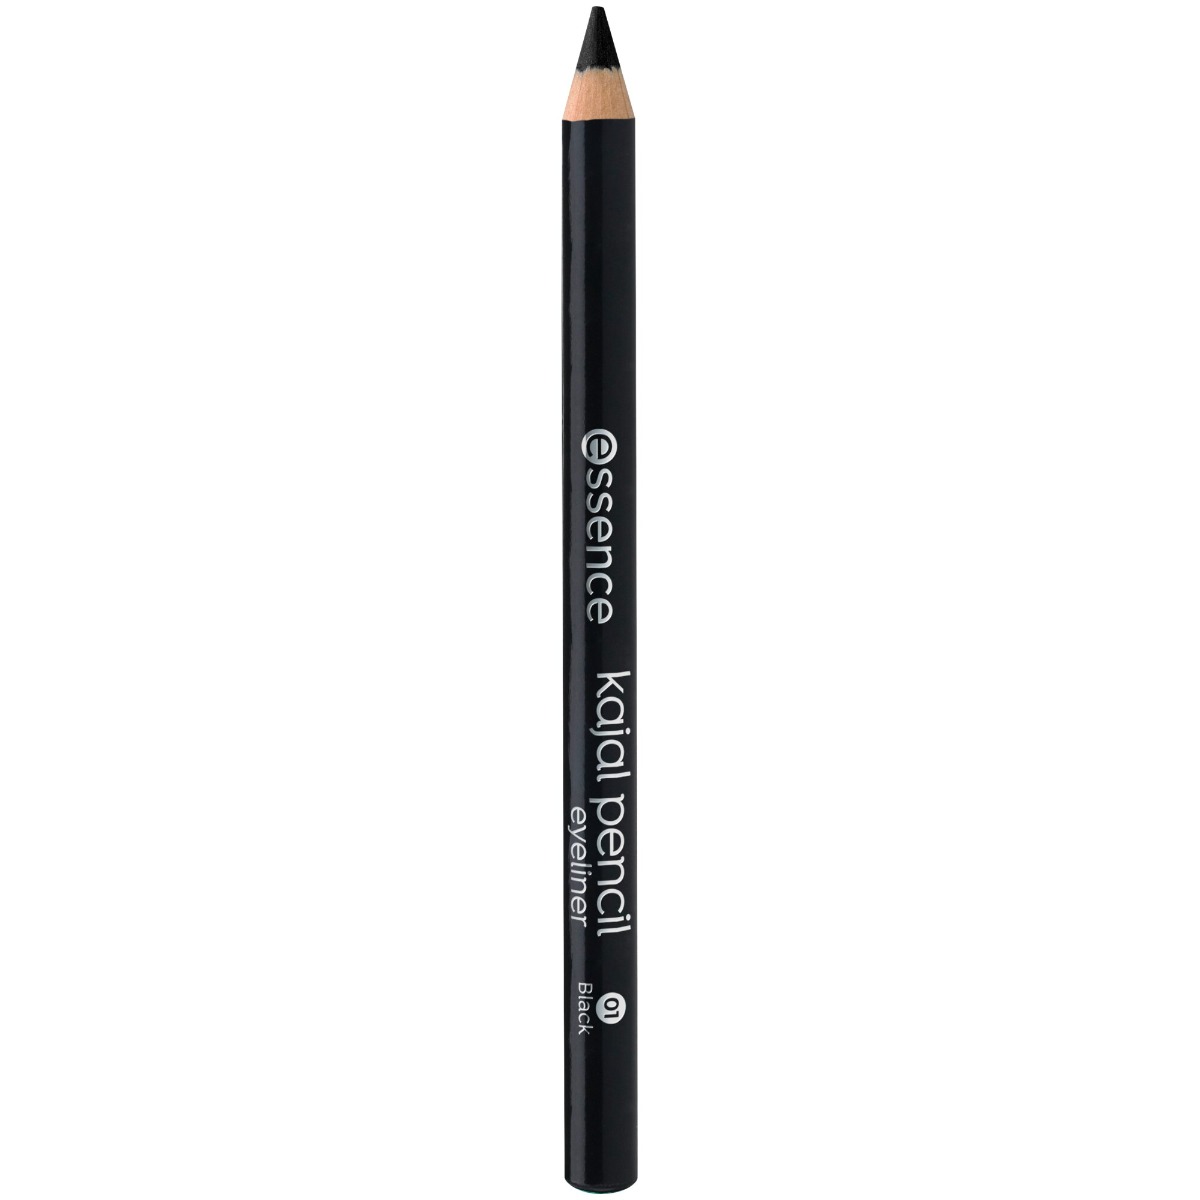 Creion pentru ochi Kajal 01 - Black, 1g, Essence